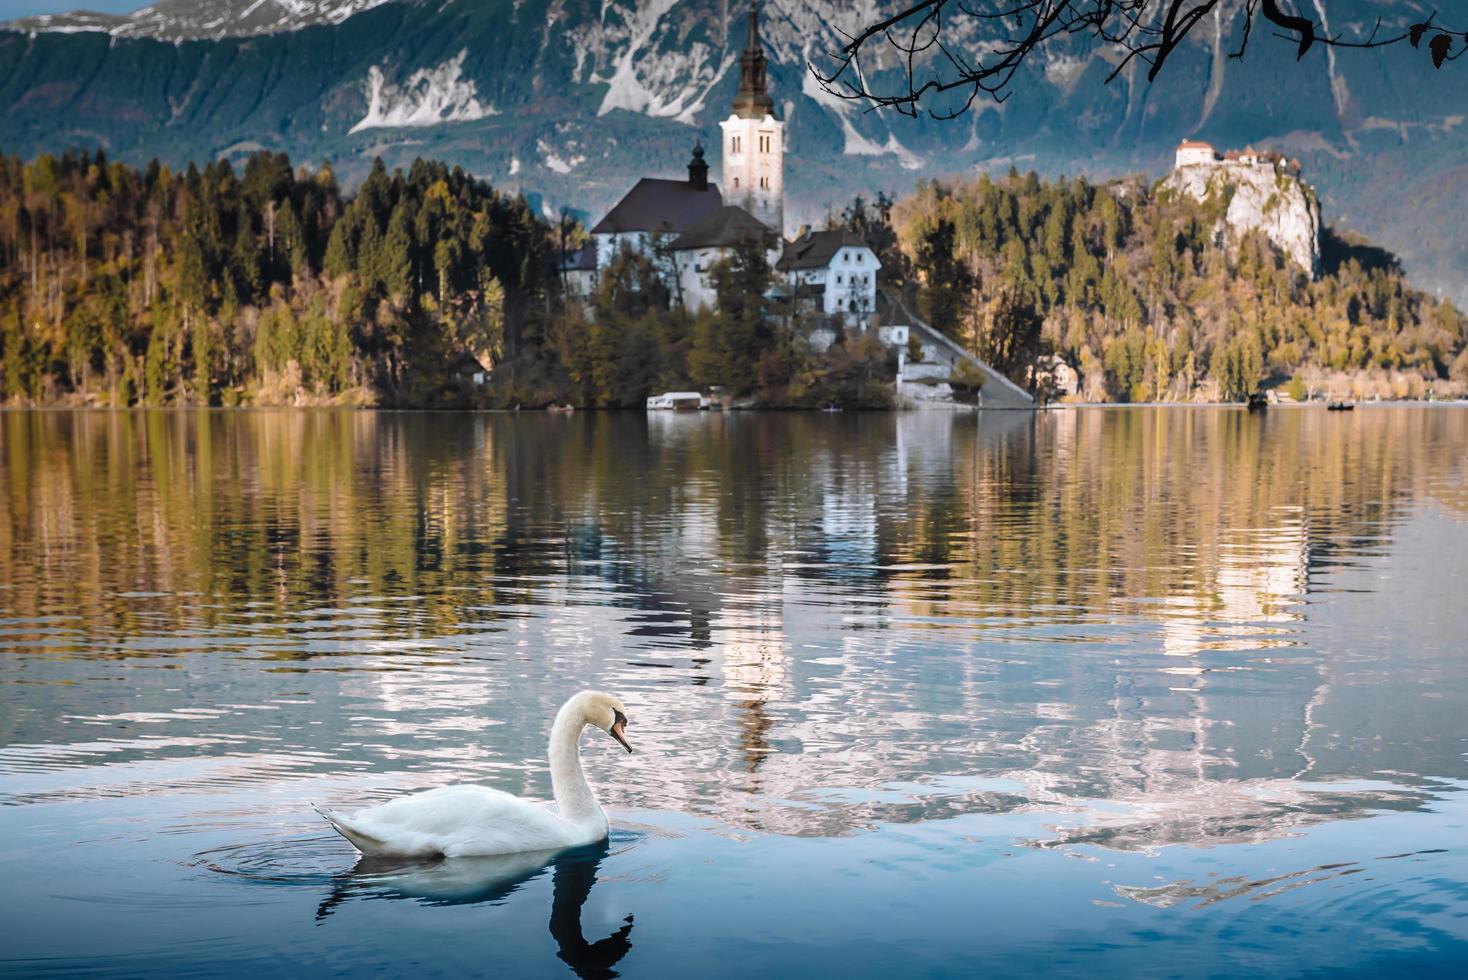 lago sangrou nas montanhas alpinas foto